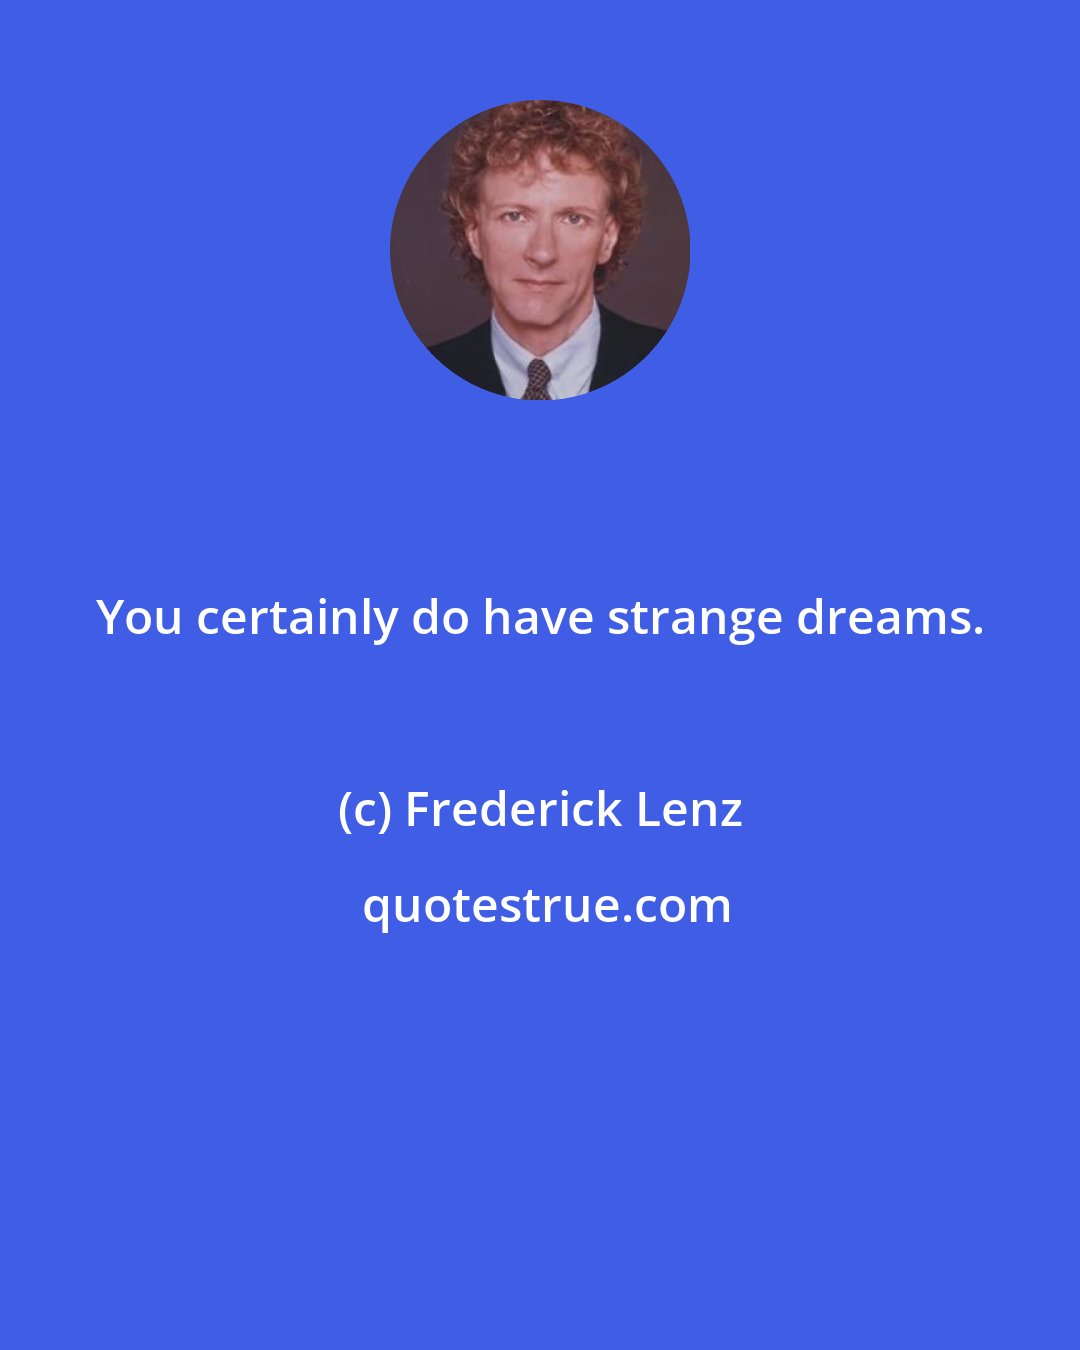 Frederick Lenz: You certainly do have strange dreams.